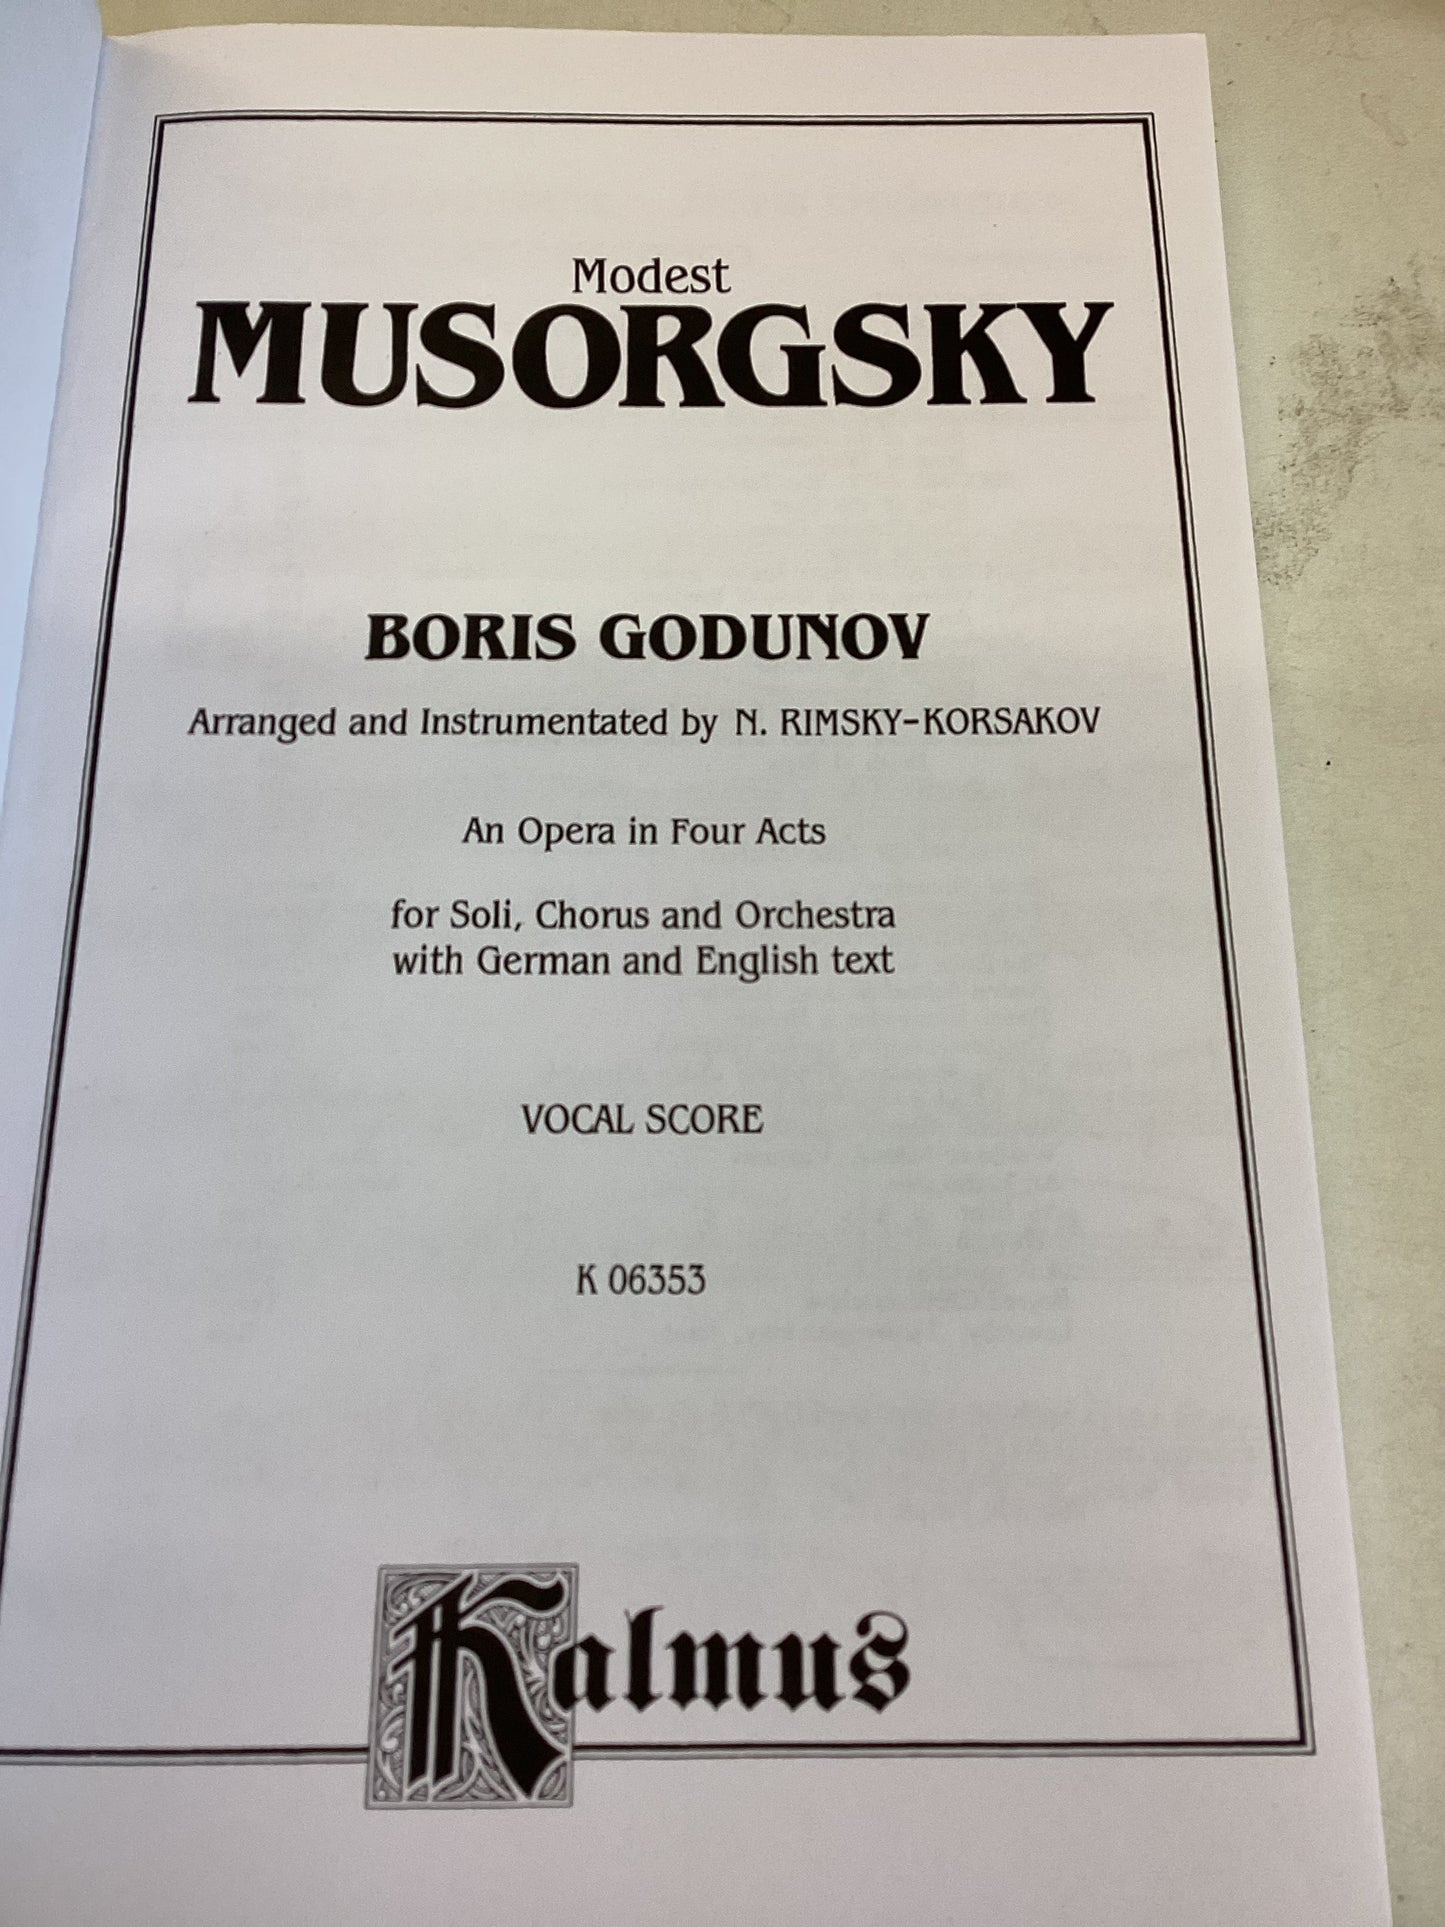 Modest Mussorgsky Boris Godunov Arranged and Instrumented by N. Rimsky-Korsakov An Opera In Four Parts